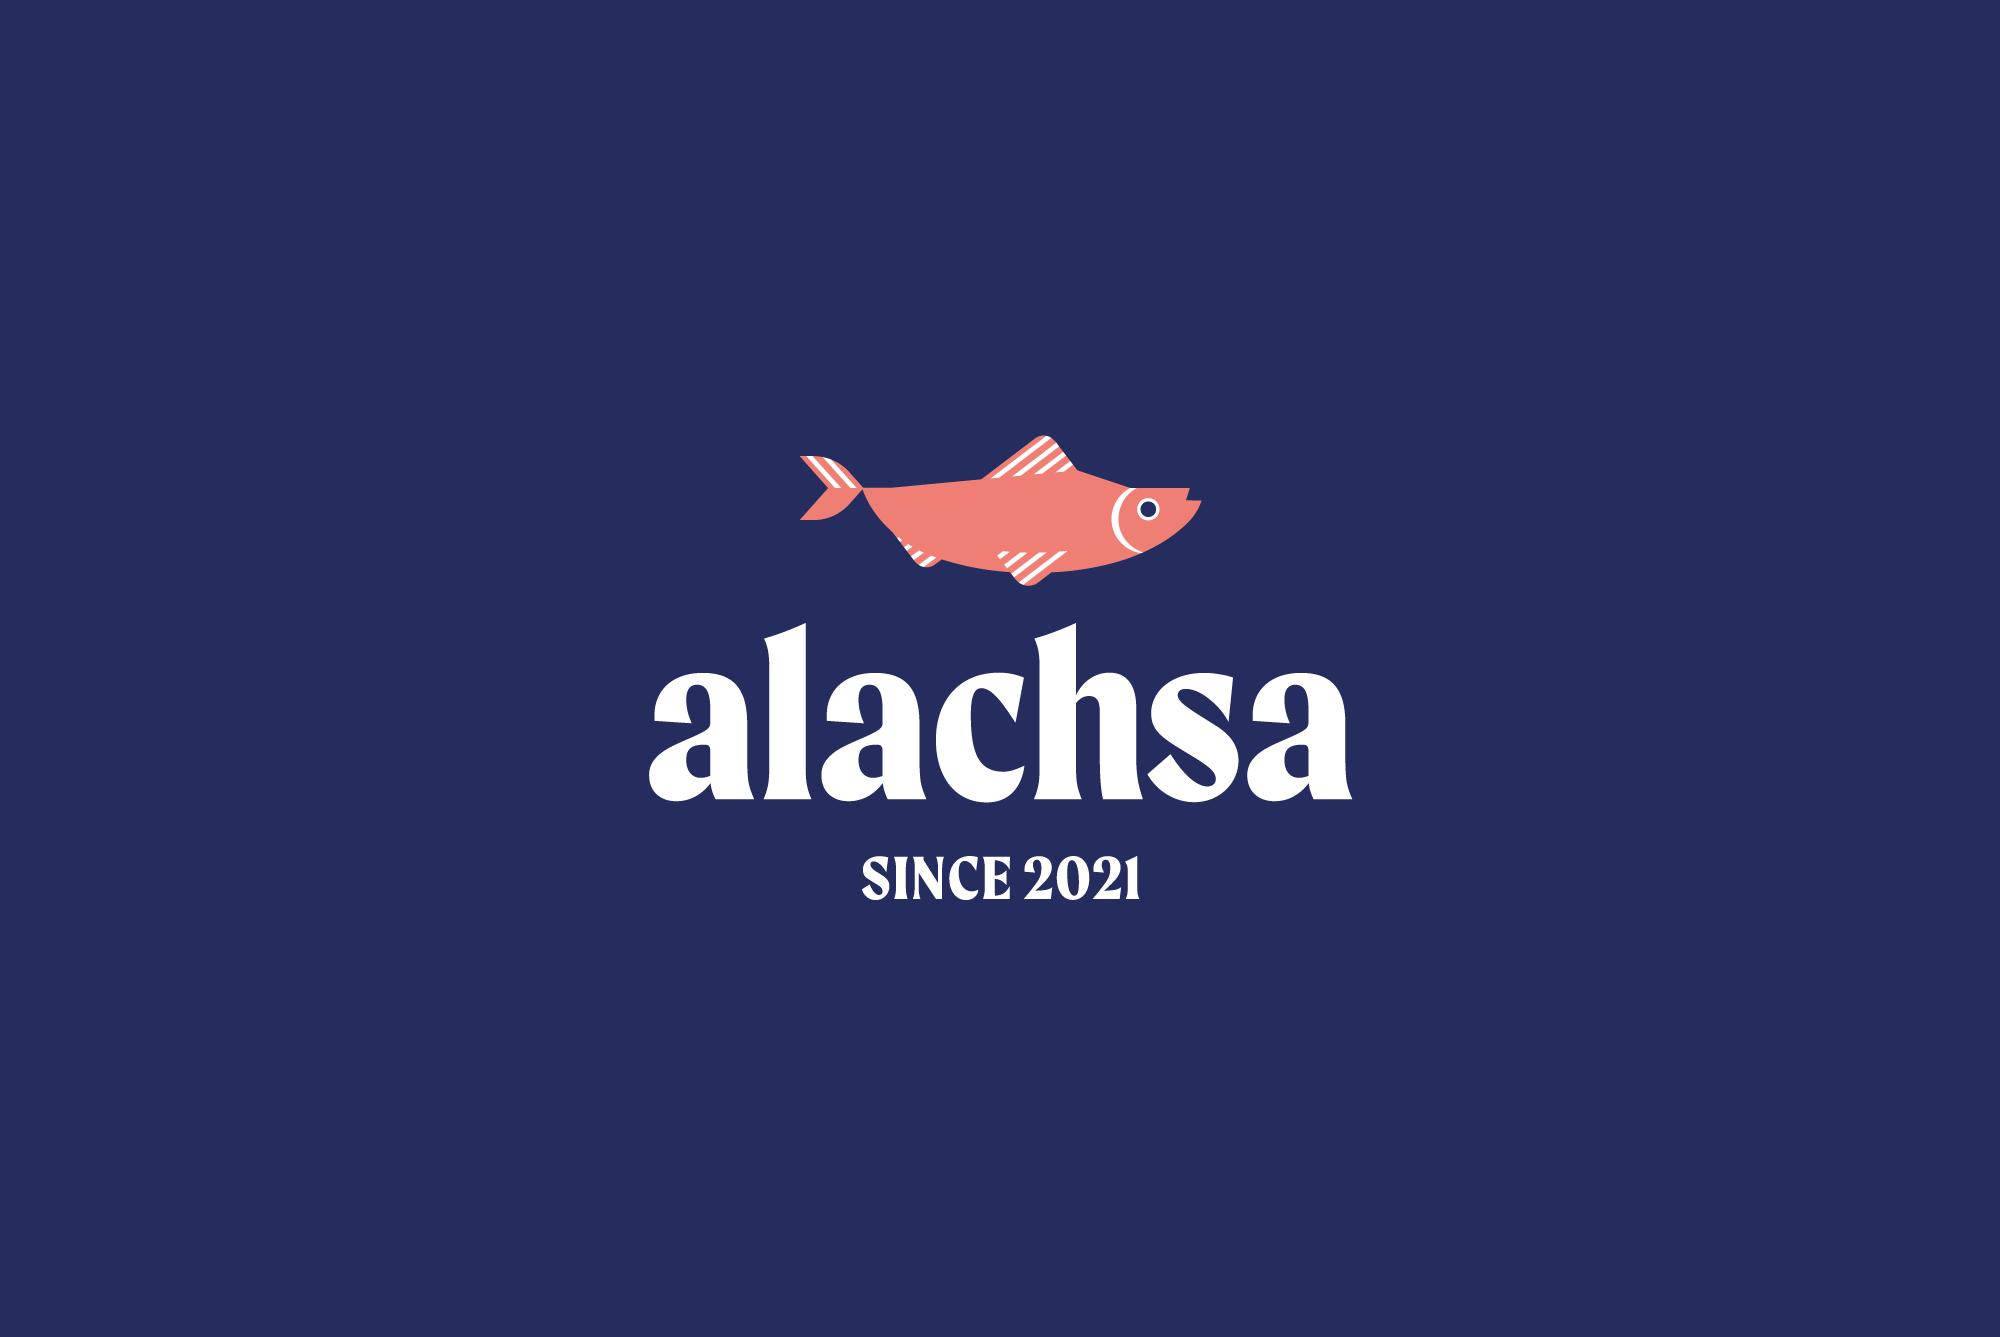 Alachsa_Logo_05ldpi-1